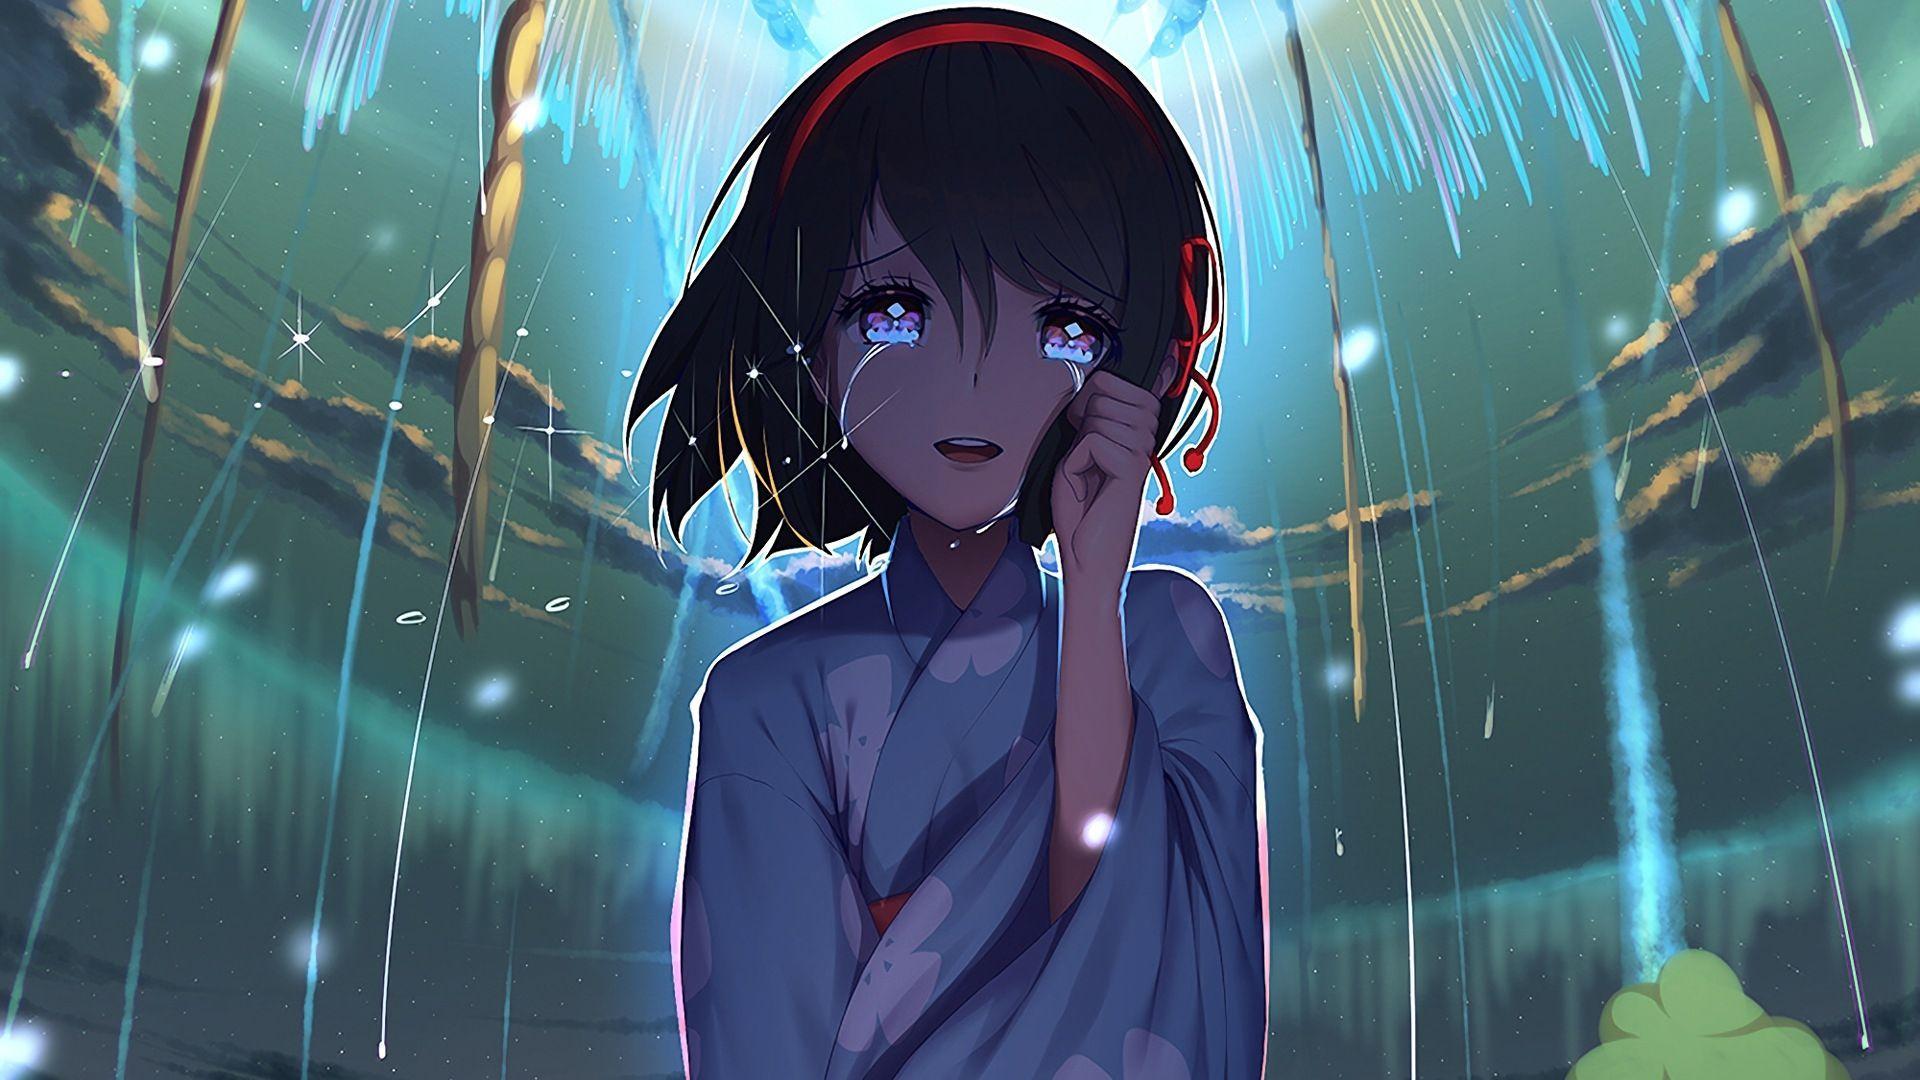 Baixe Anime Wallpaper Sad Girl no PC